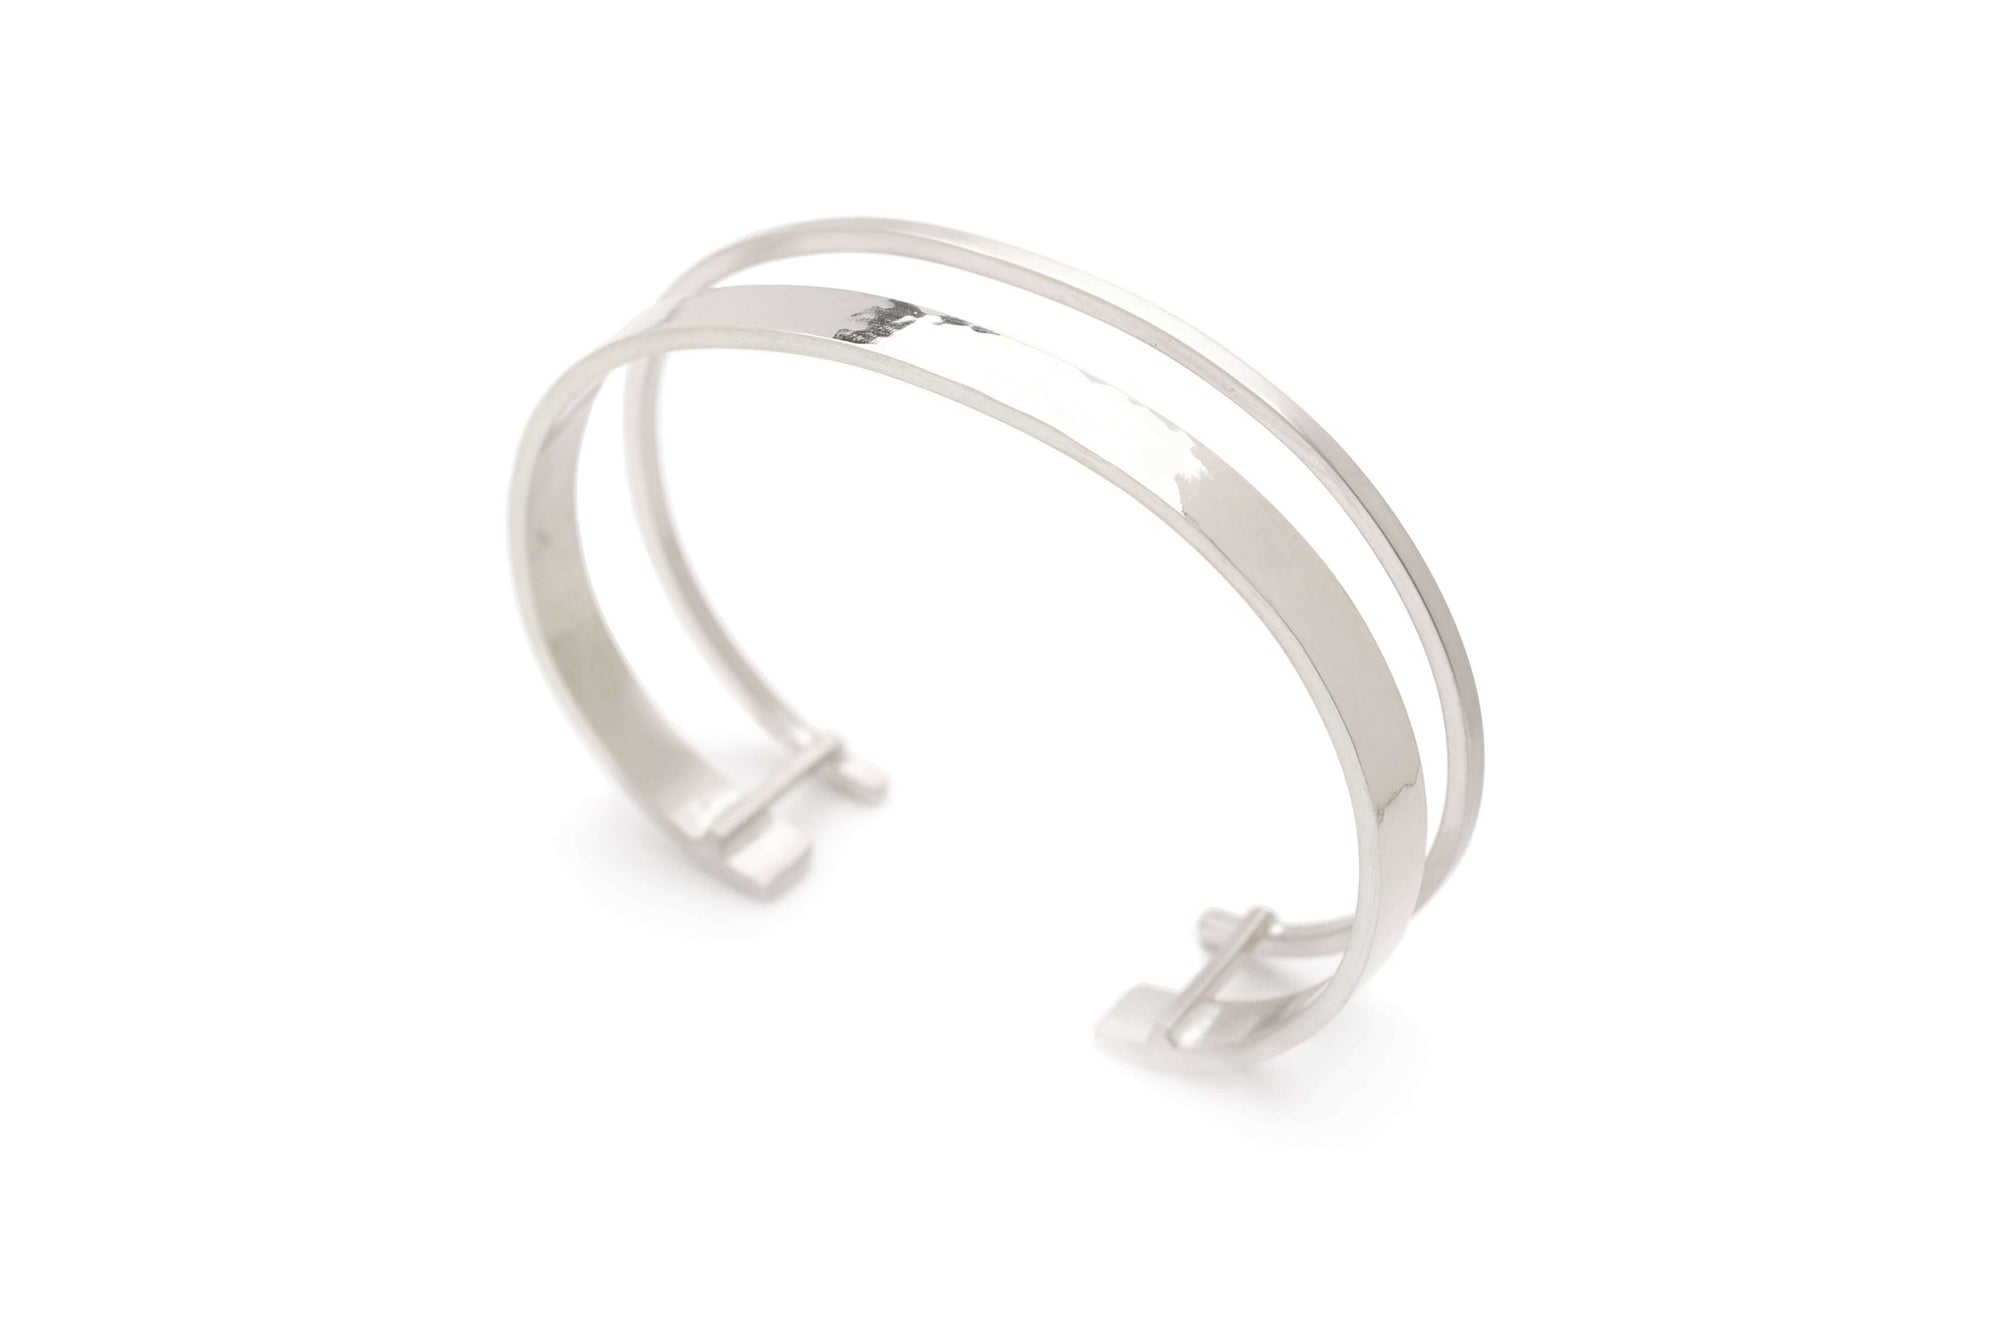 A handmade sterling silver cuff bracelet, women's jewelry gift option